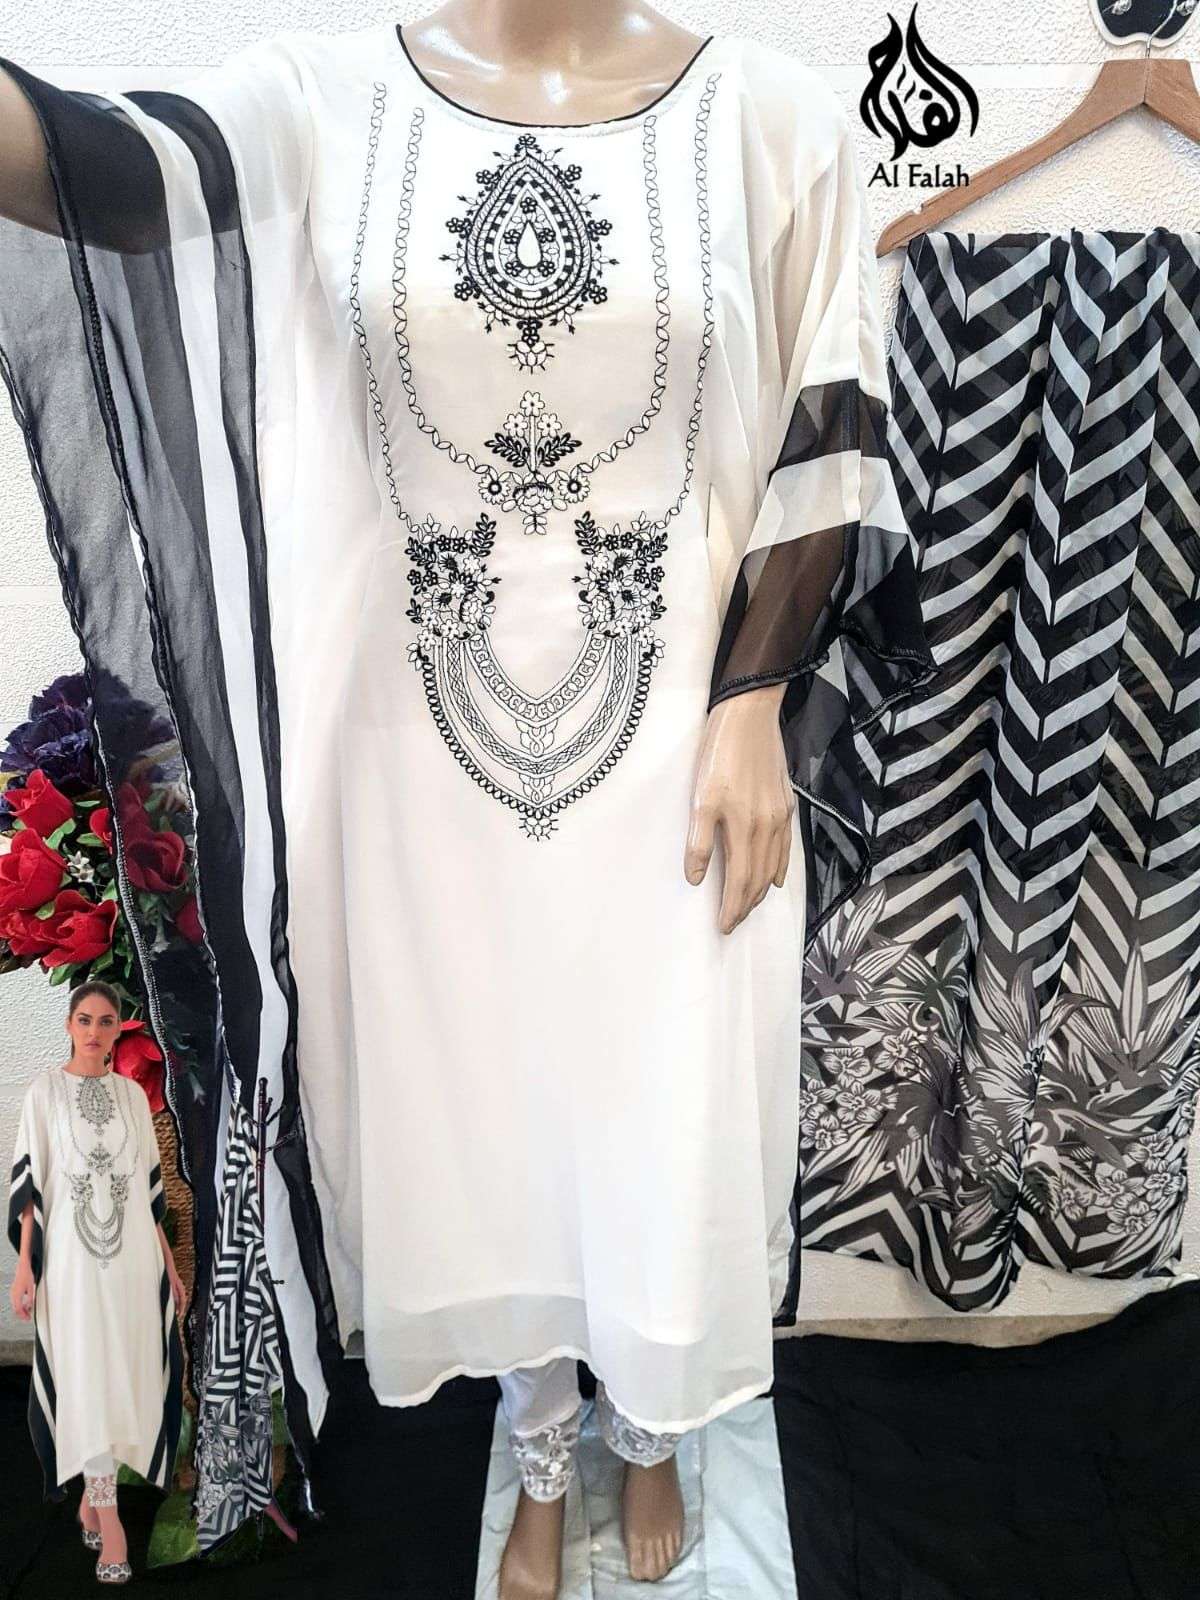 al falah 5007 series trendy look designer pakistani salwar suits latest collection 2023 